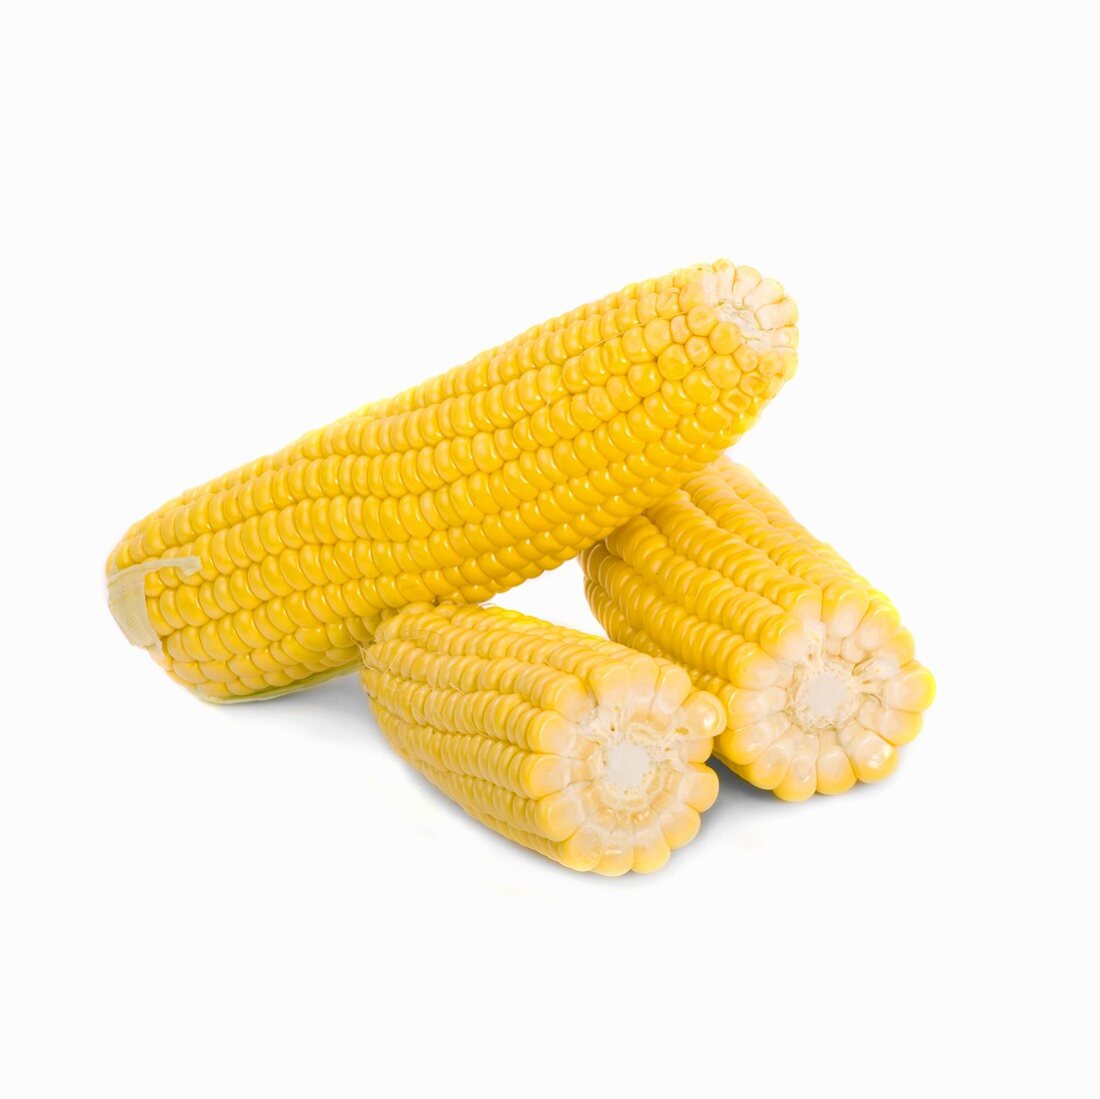 Three corn on the cobs